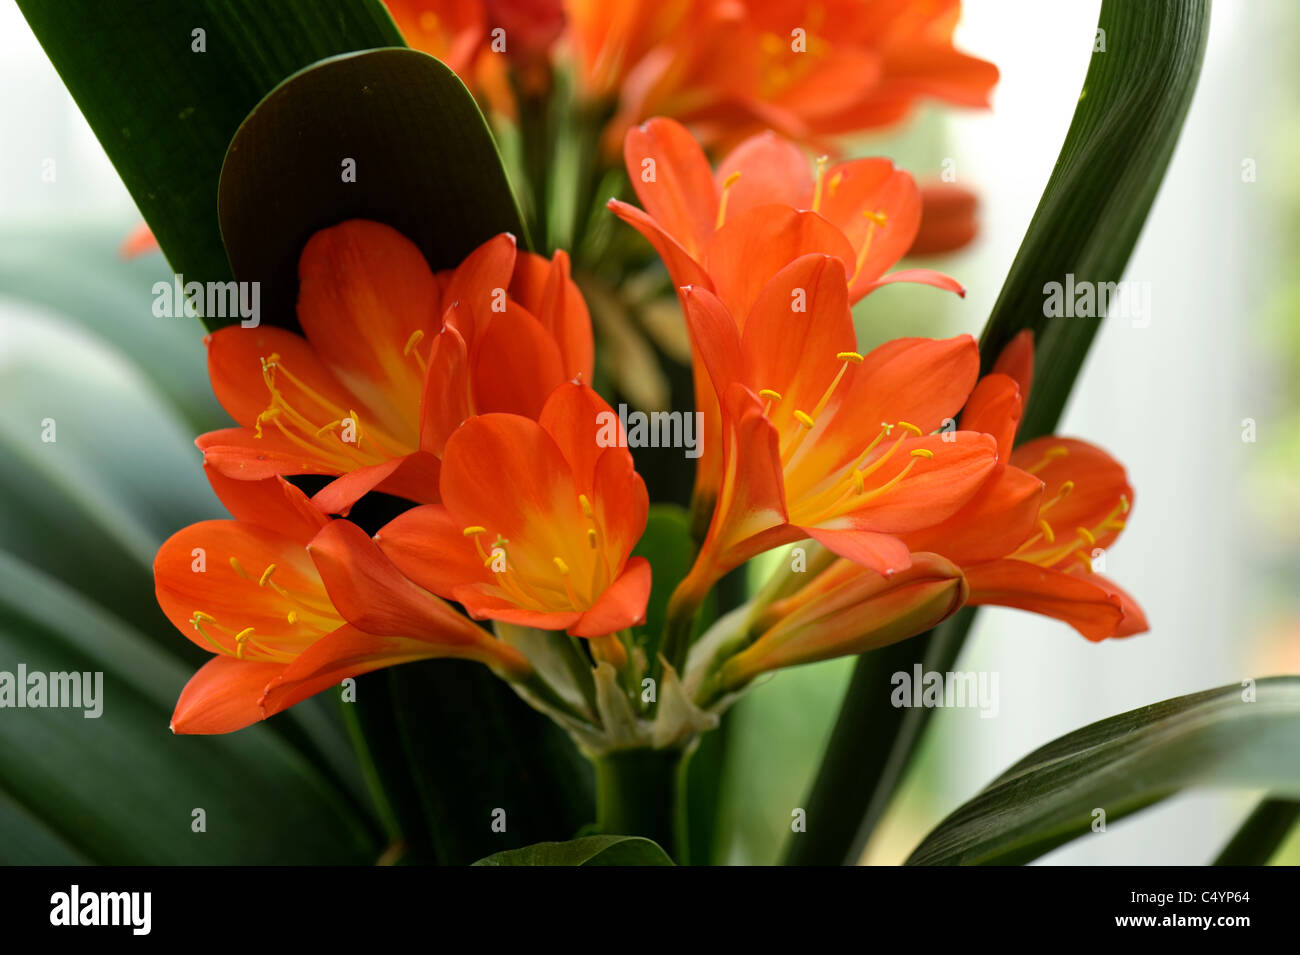 Kaffir lily or bush lily (Clivia miniata) pot plant flowering Stock Photo